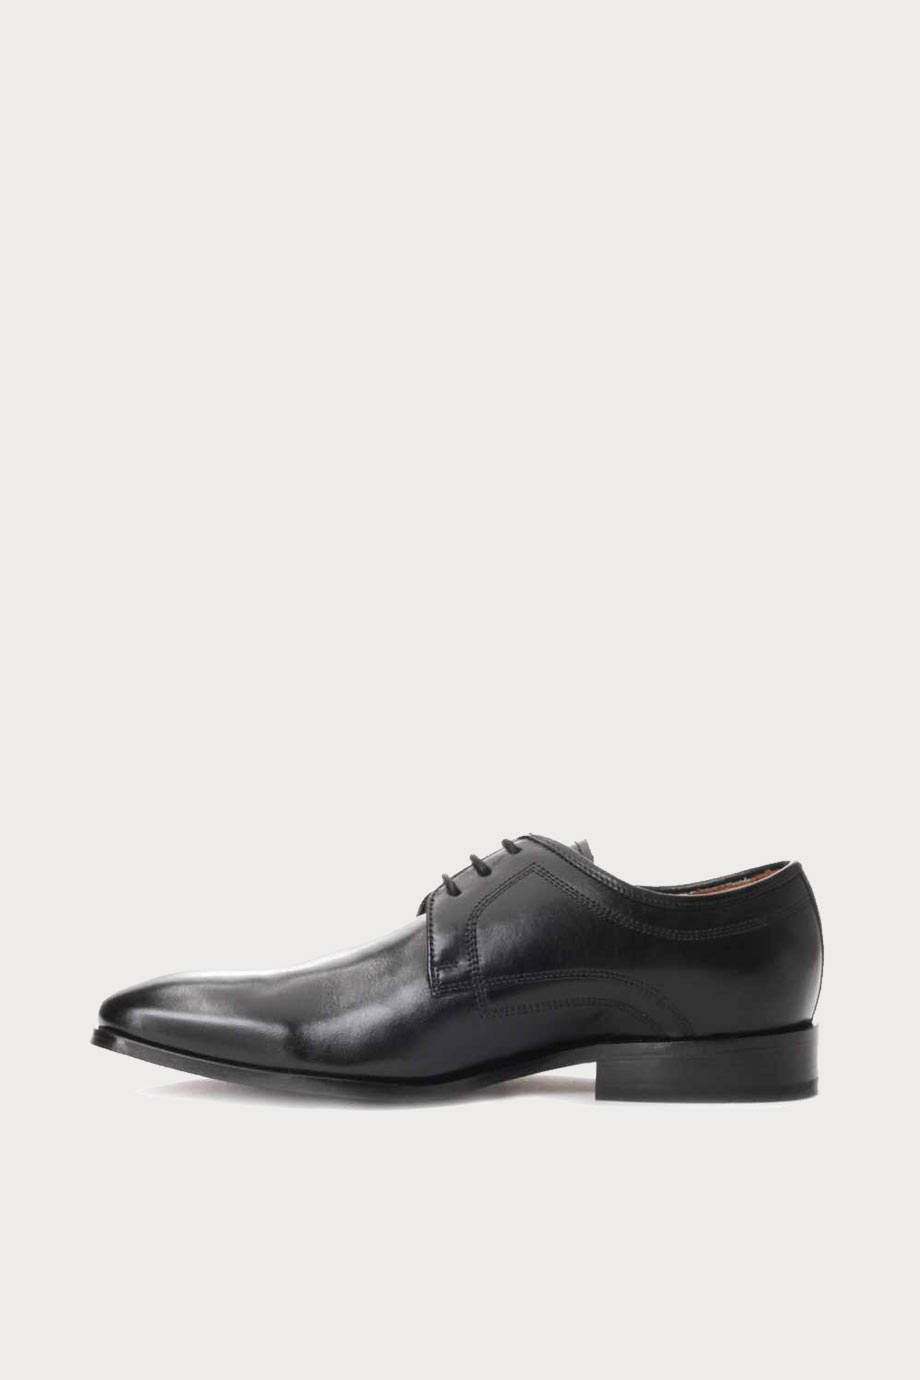 spiridoula metheniti shoes xalkida p dexie plain black leather clarks 2